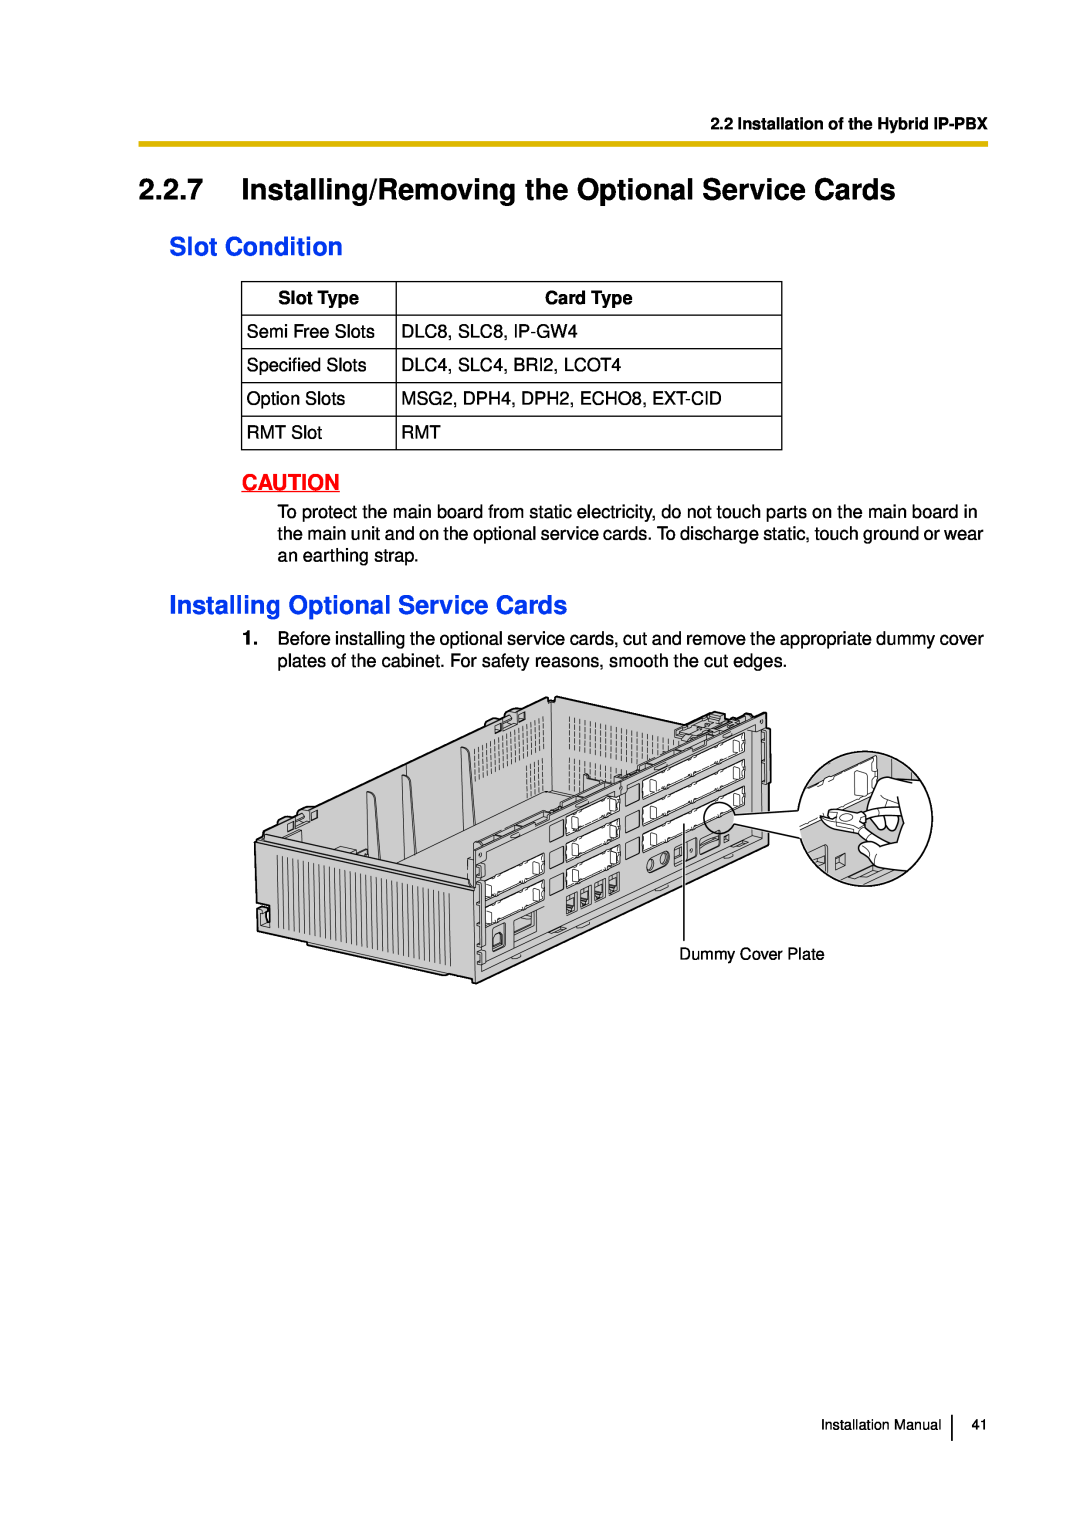 Panasonic KX-TDA30 installation manual Slot Condition, Installing Optional Service Cards, Slot Type, Card Type 